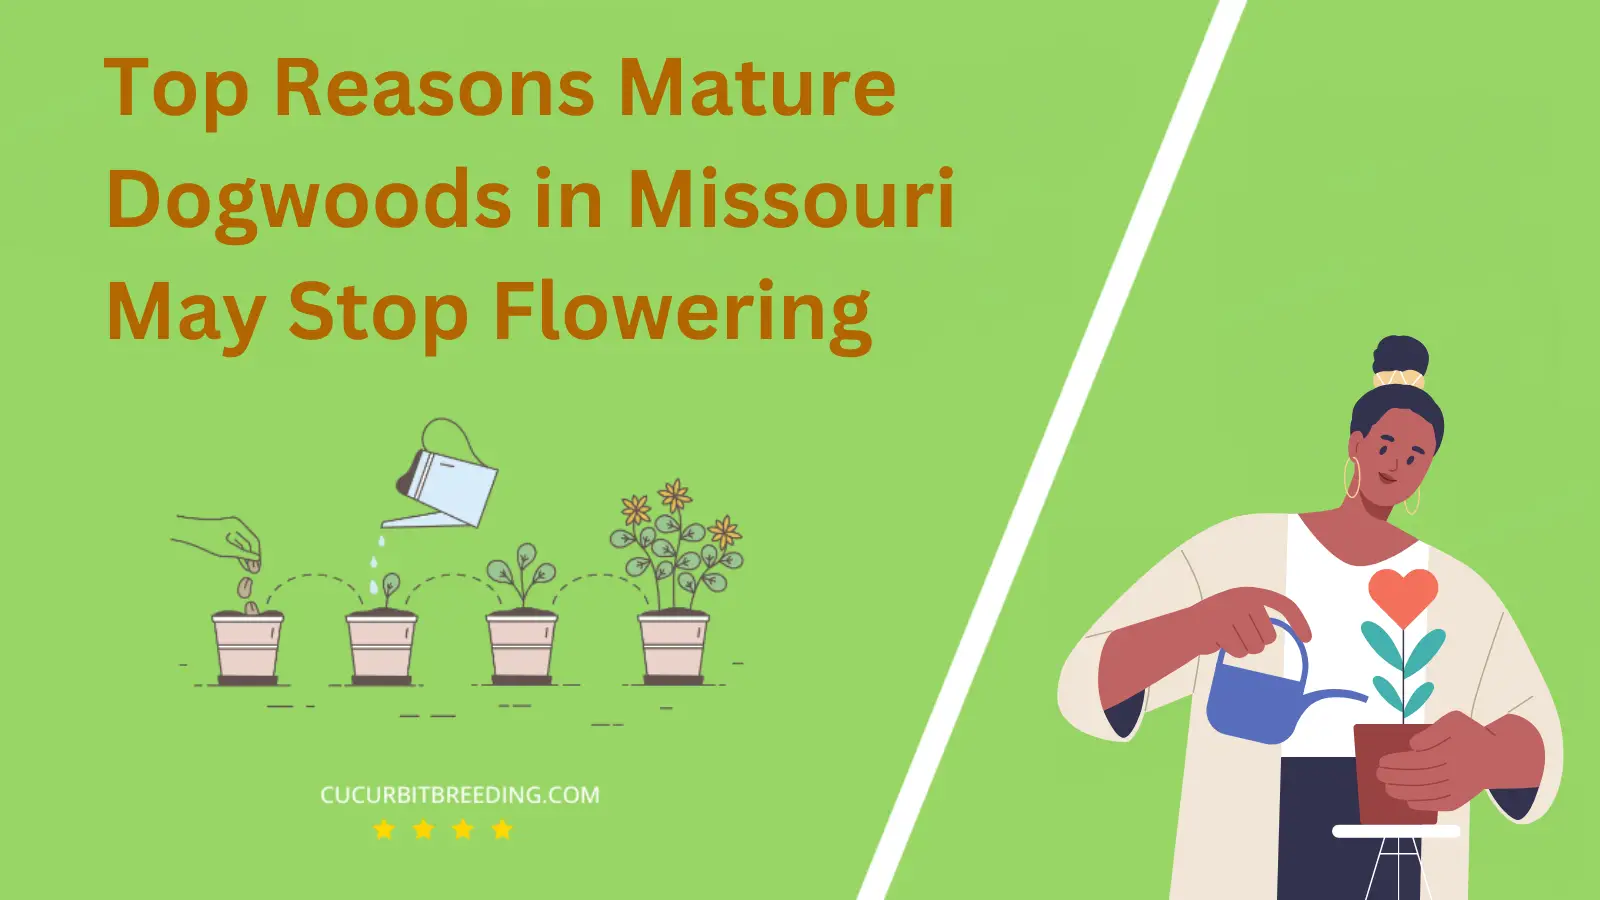 Top Reasons Mature Dogwoods in Missouri May Stop Flowering